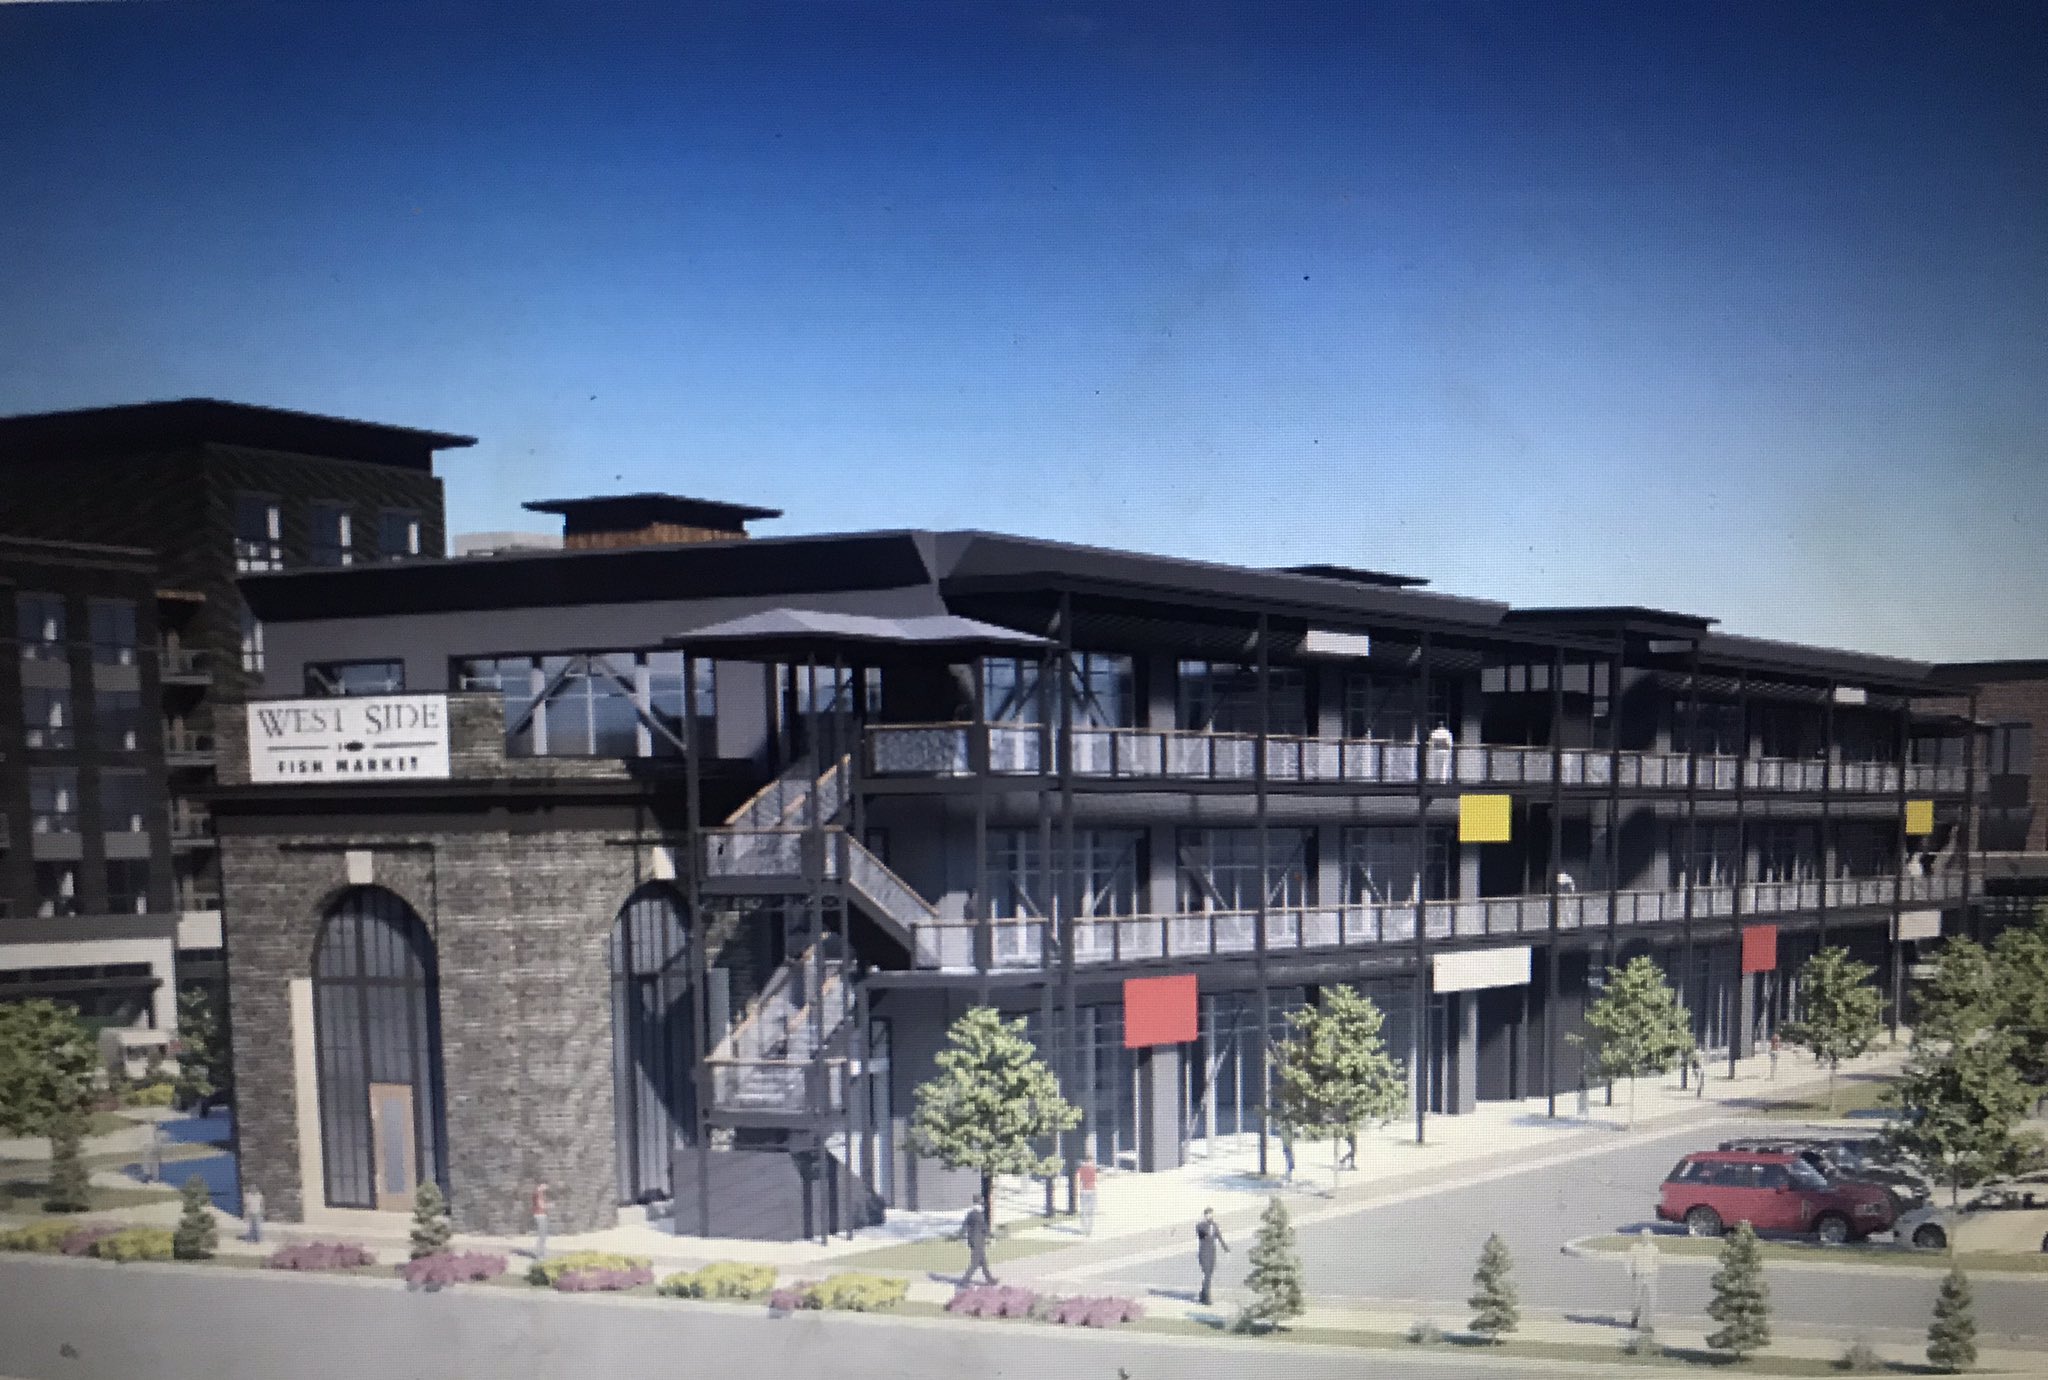 Possible new development near St. Johns Town Center